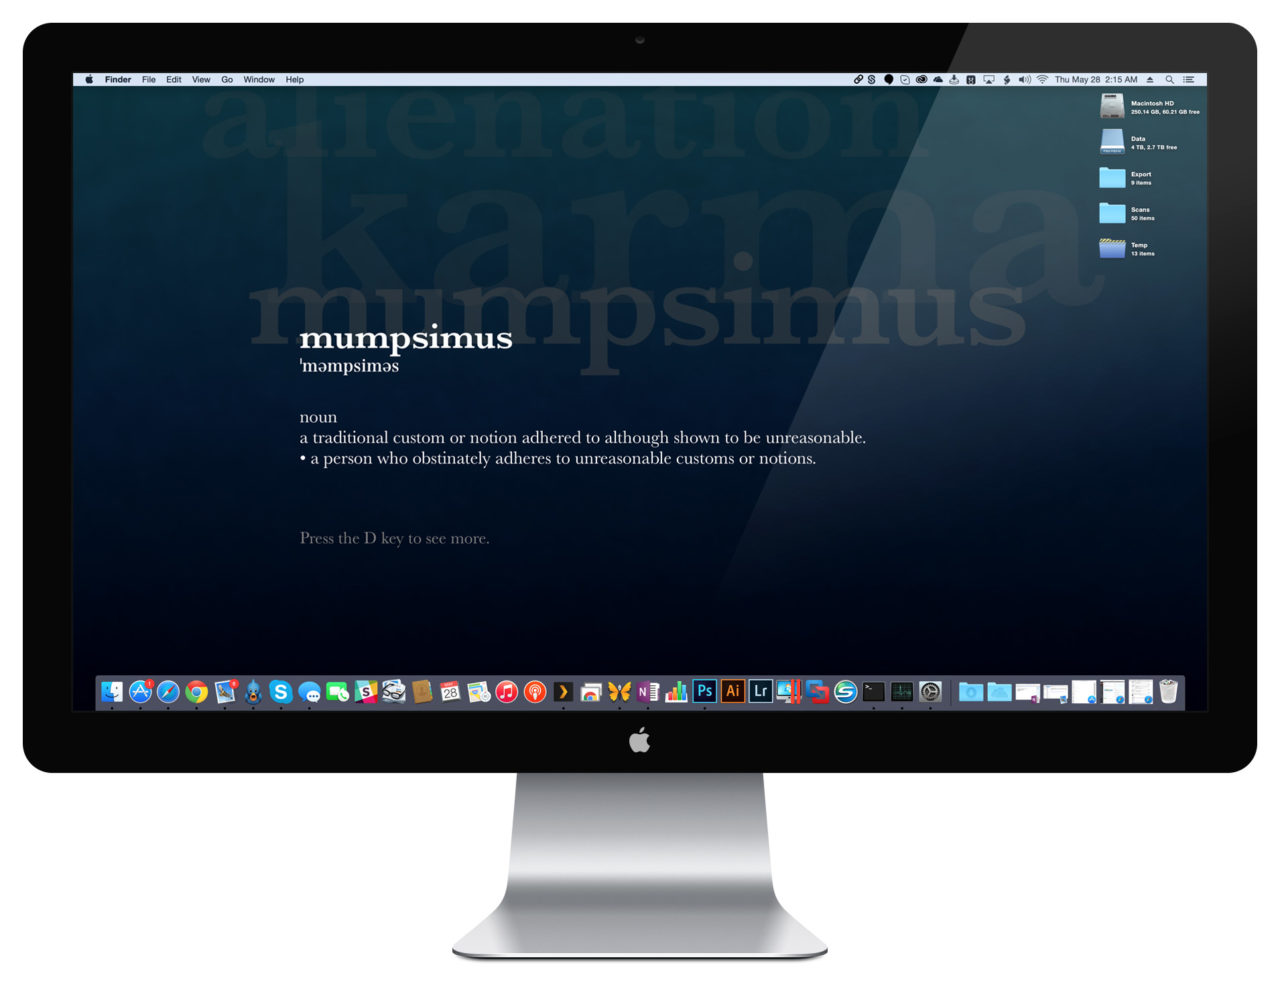 mac screen saver desktop background